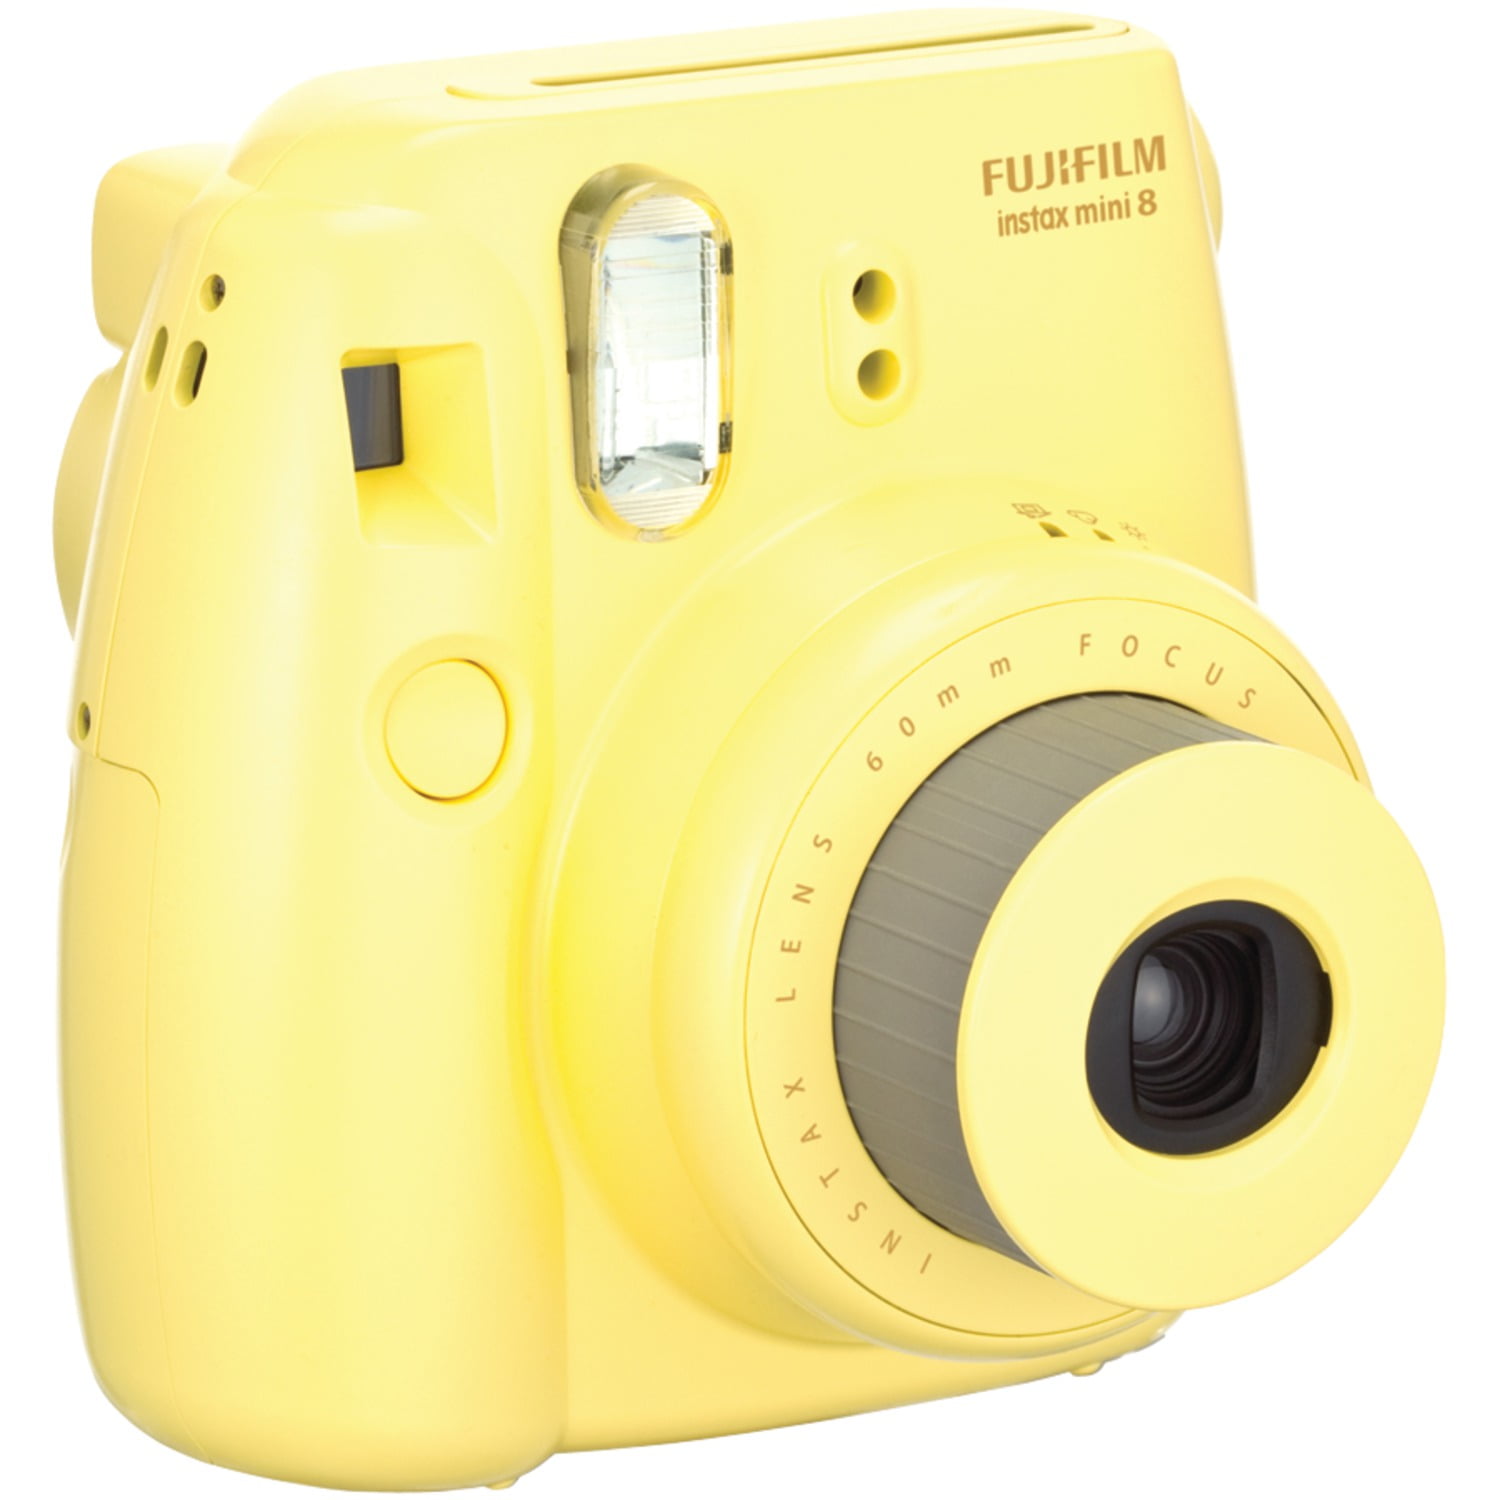 evenwichtig Teken Defecte Fujifilm 16273441 Instax Mini 8 Instant Camera (Yellow) - Walmart.com